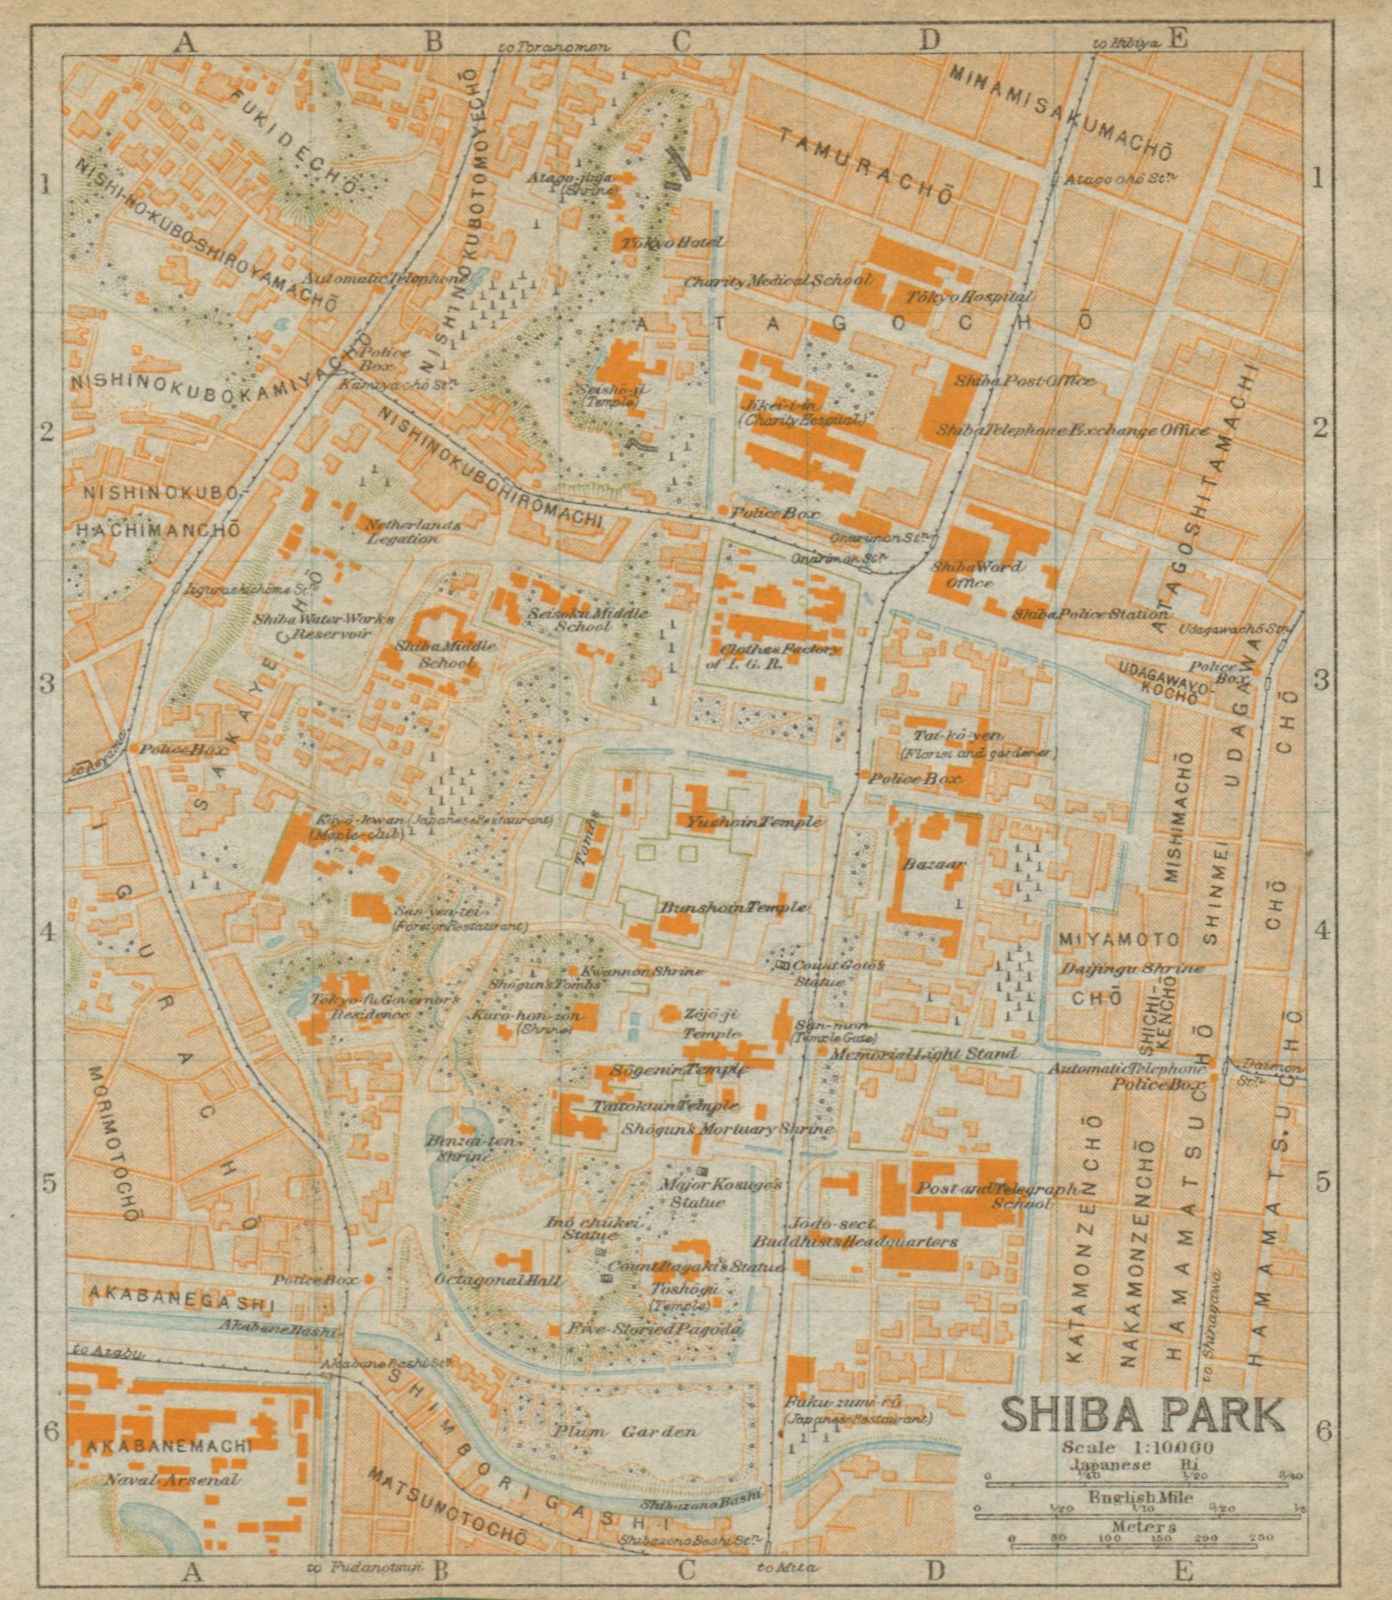 Associate Product Shiba Park antique town city plan. Minato, Tokyo. Japan 1914 old map